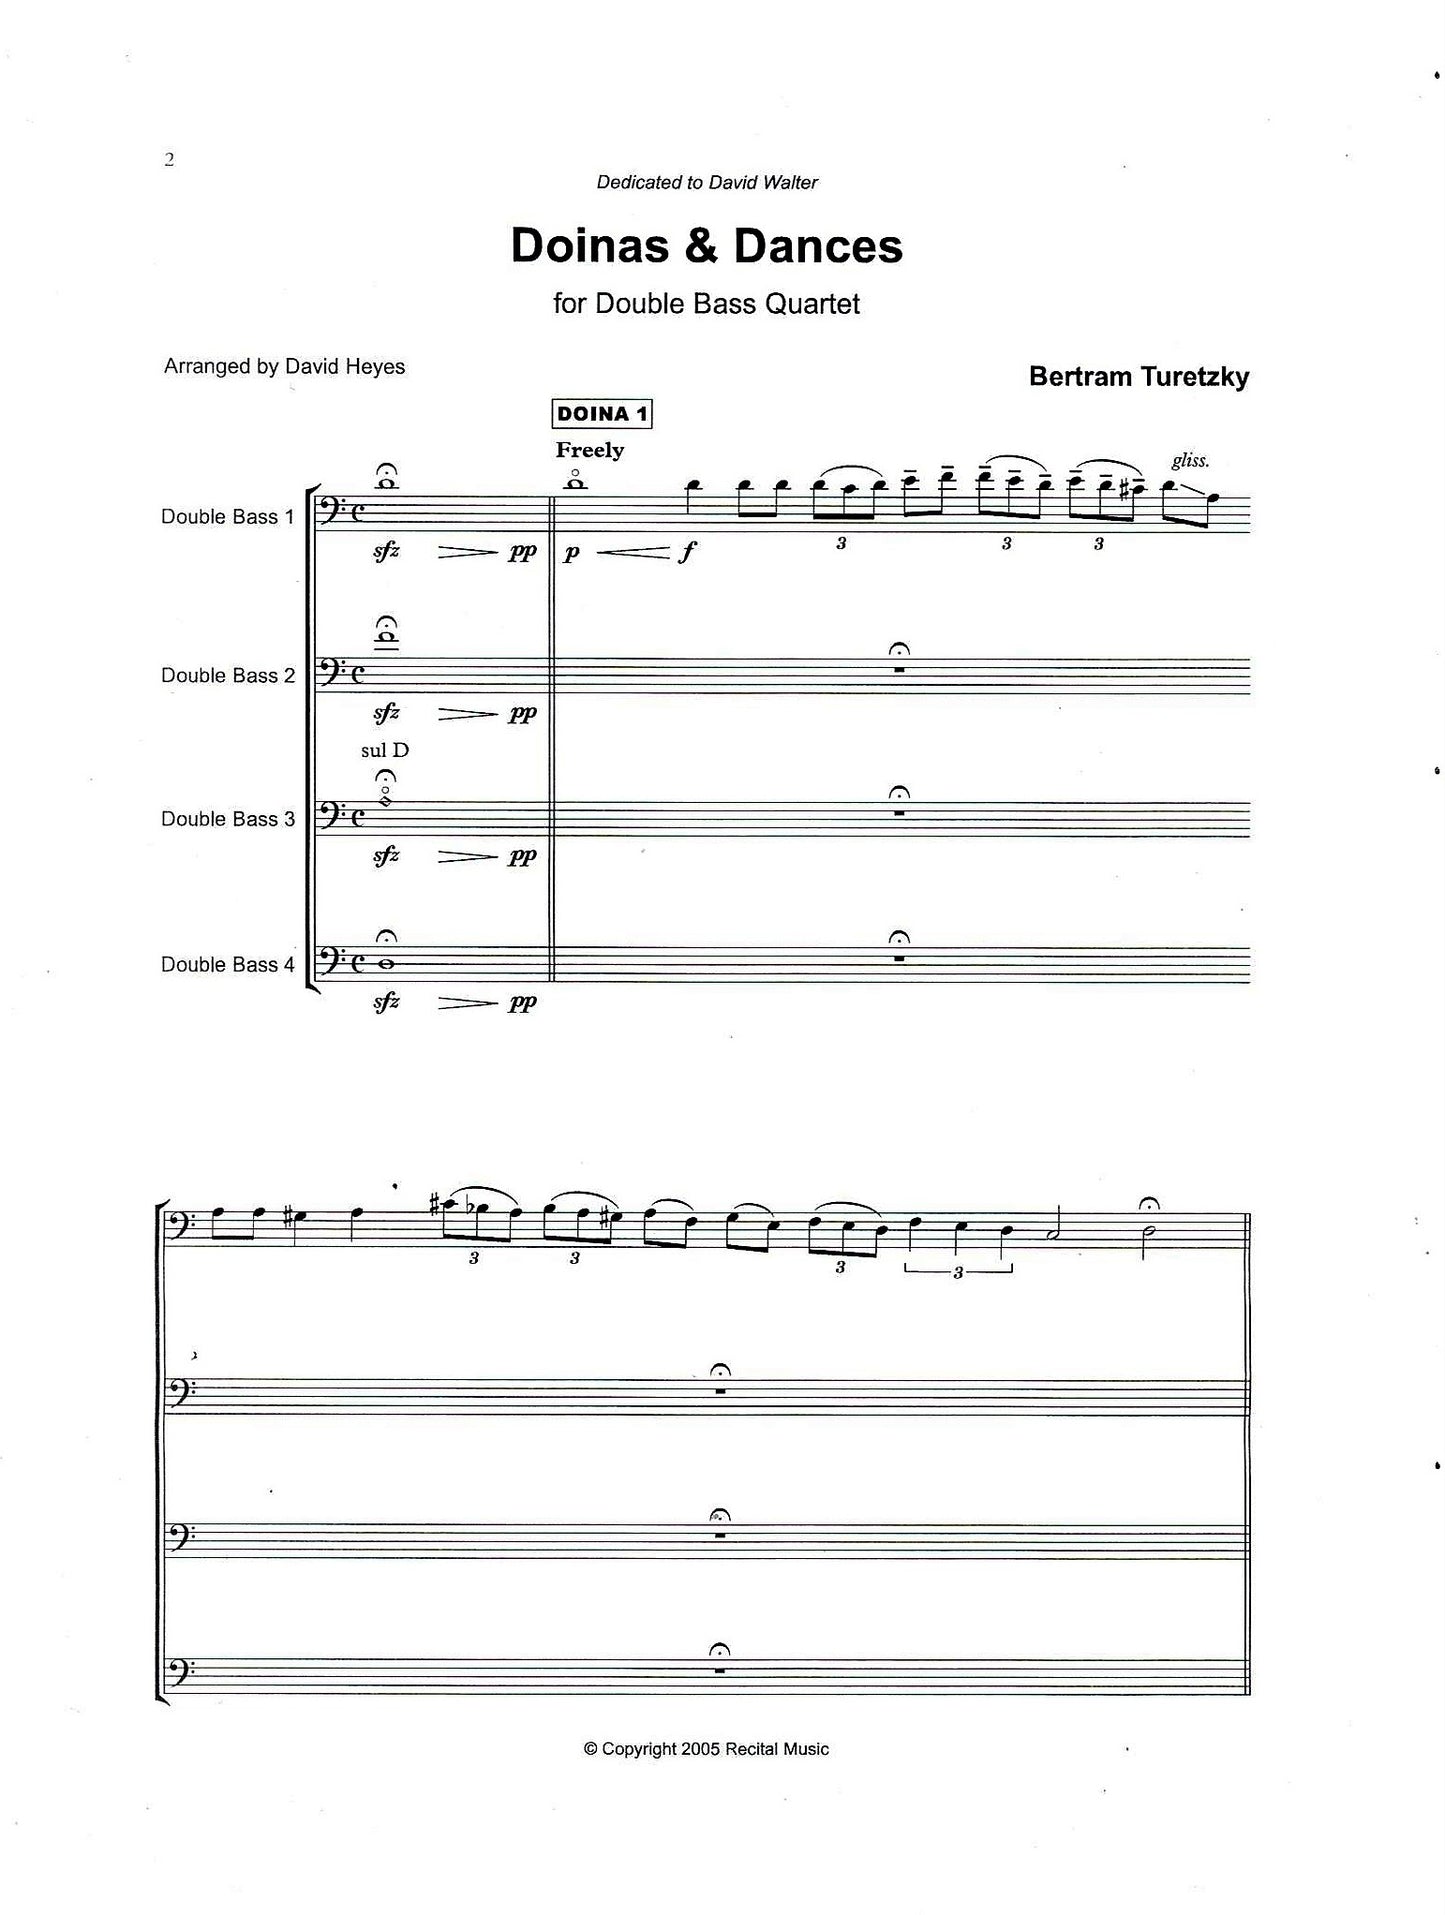 Bertram Turetzky: Doinas & Dances for 4, 5 or more double basses